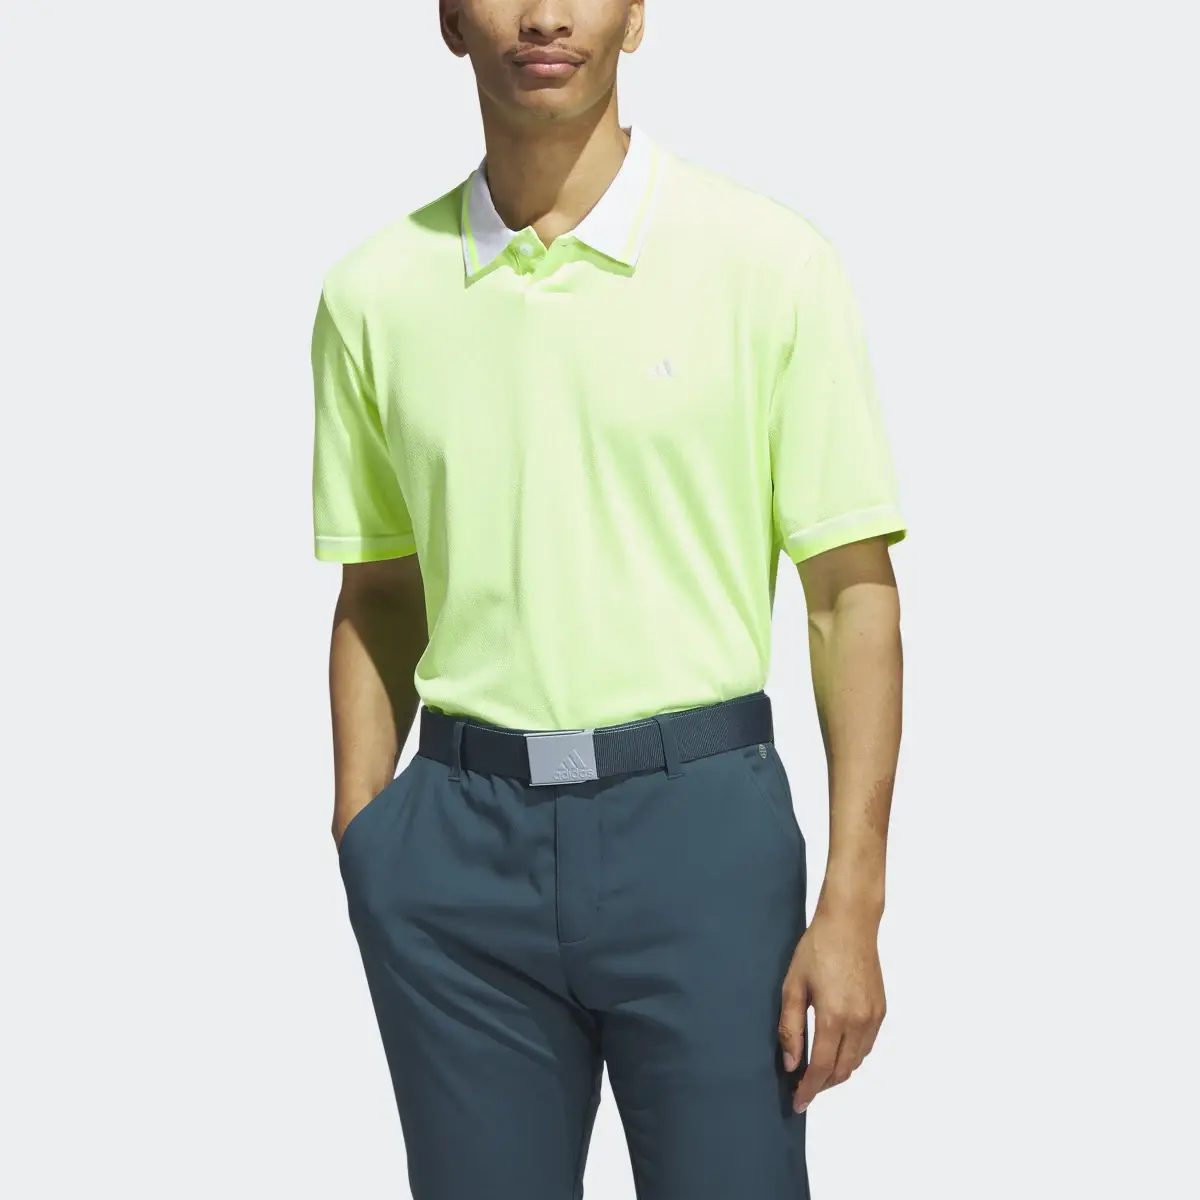 Adidas Ultimate365 Tour PRIMEKNIT Golf Polo Shirt. 1